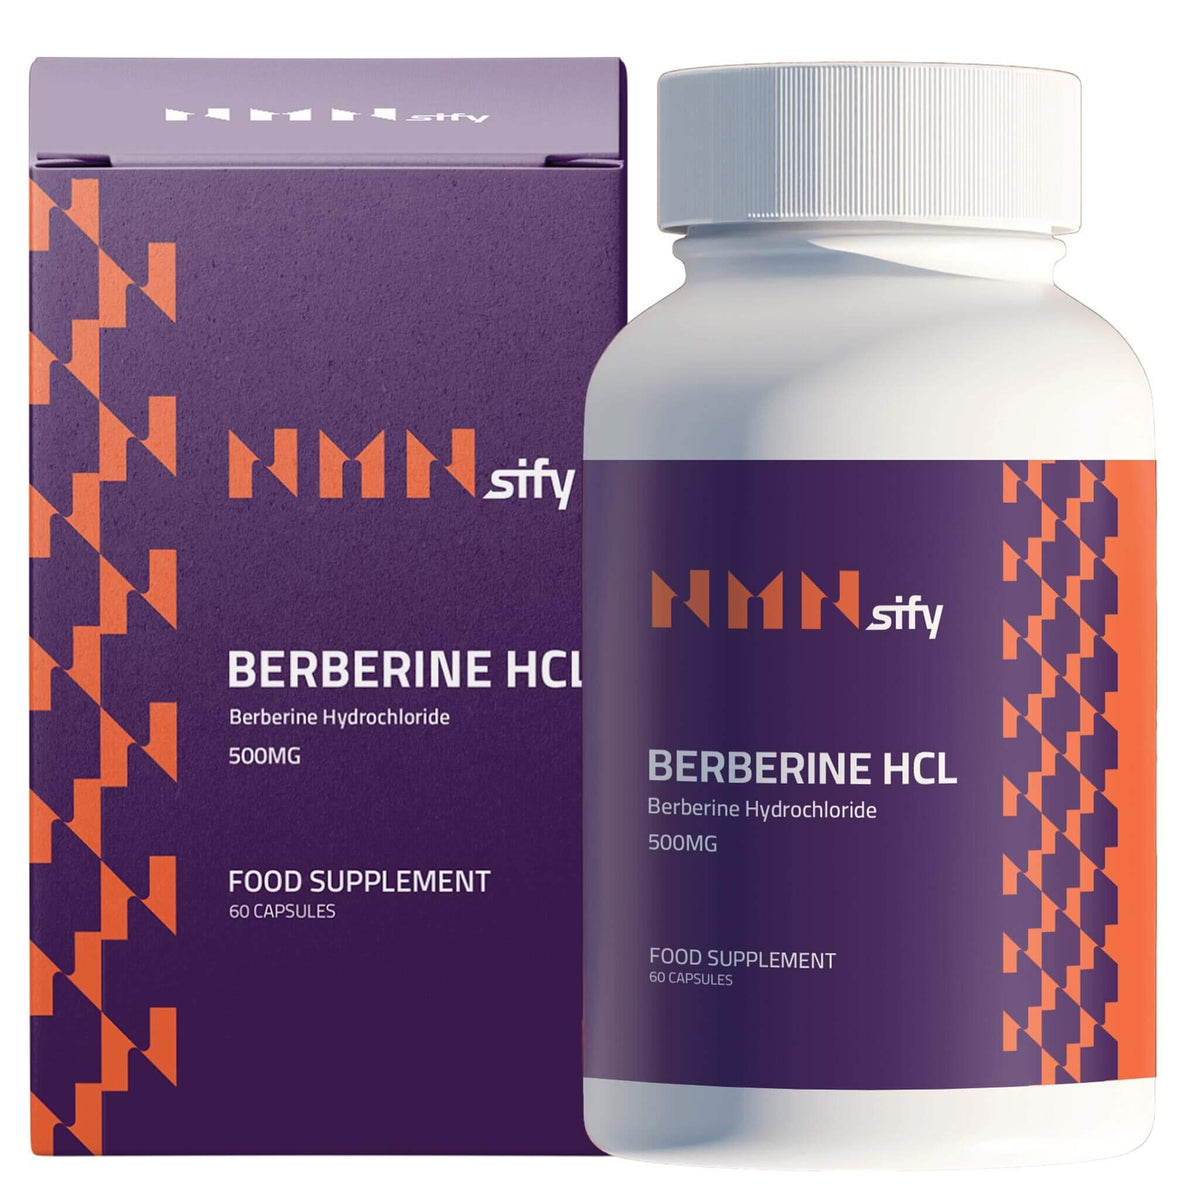 Berberine-UK-Berberine-benefits-Berberine-supplement-nmnsify-berberine-hcl-500mg-bottle-and-box